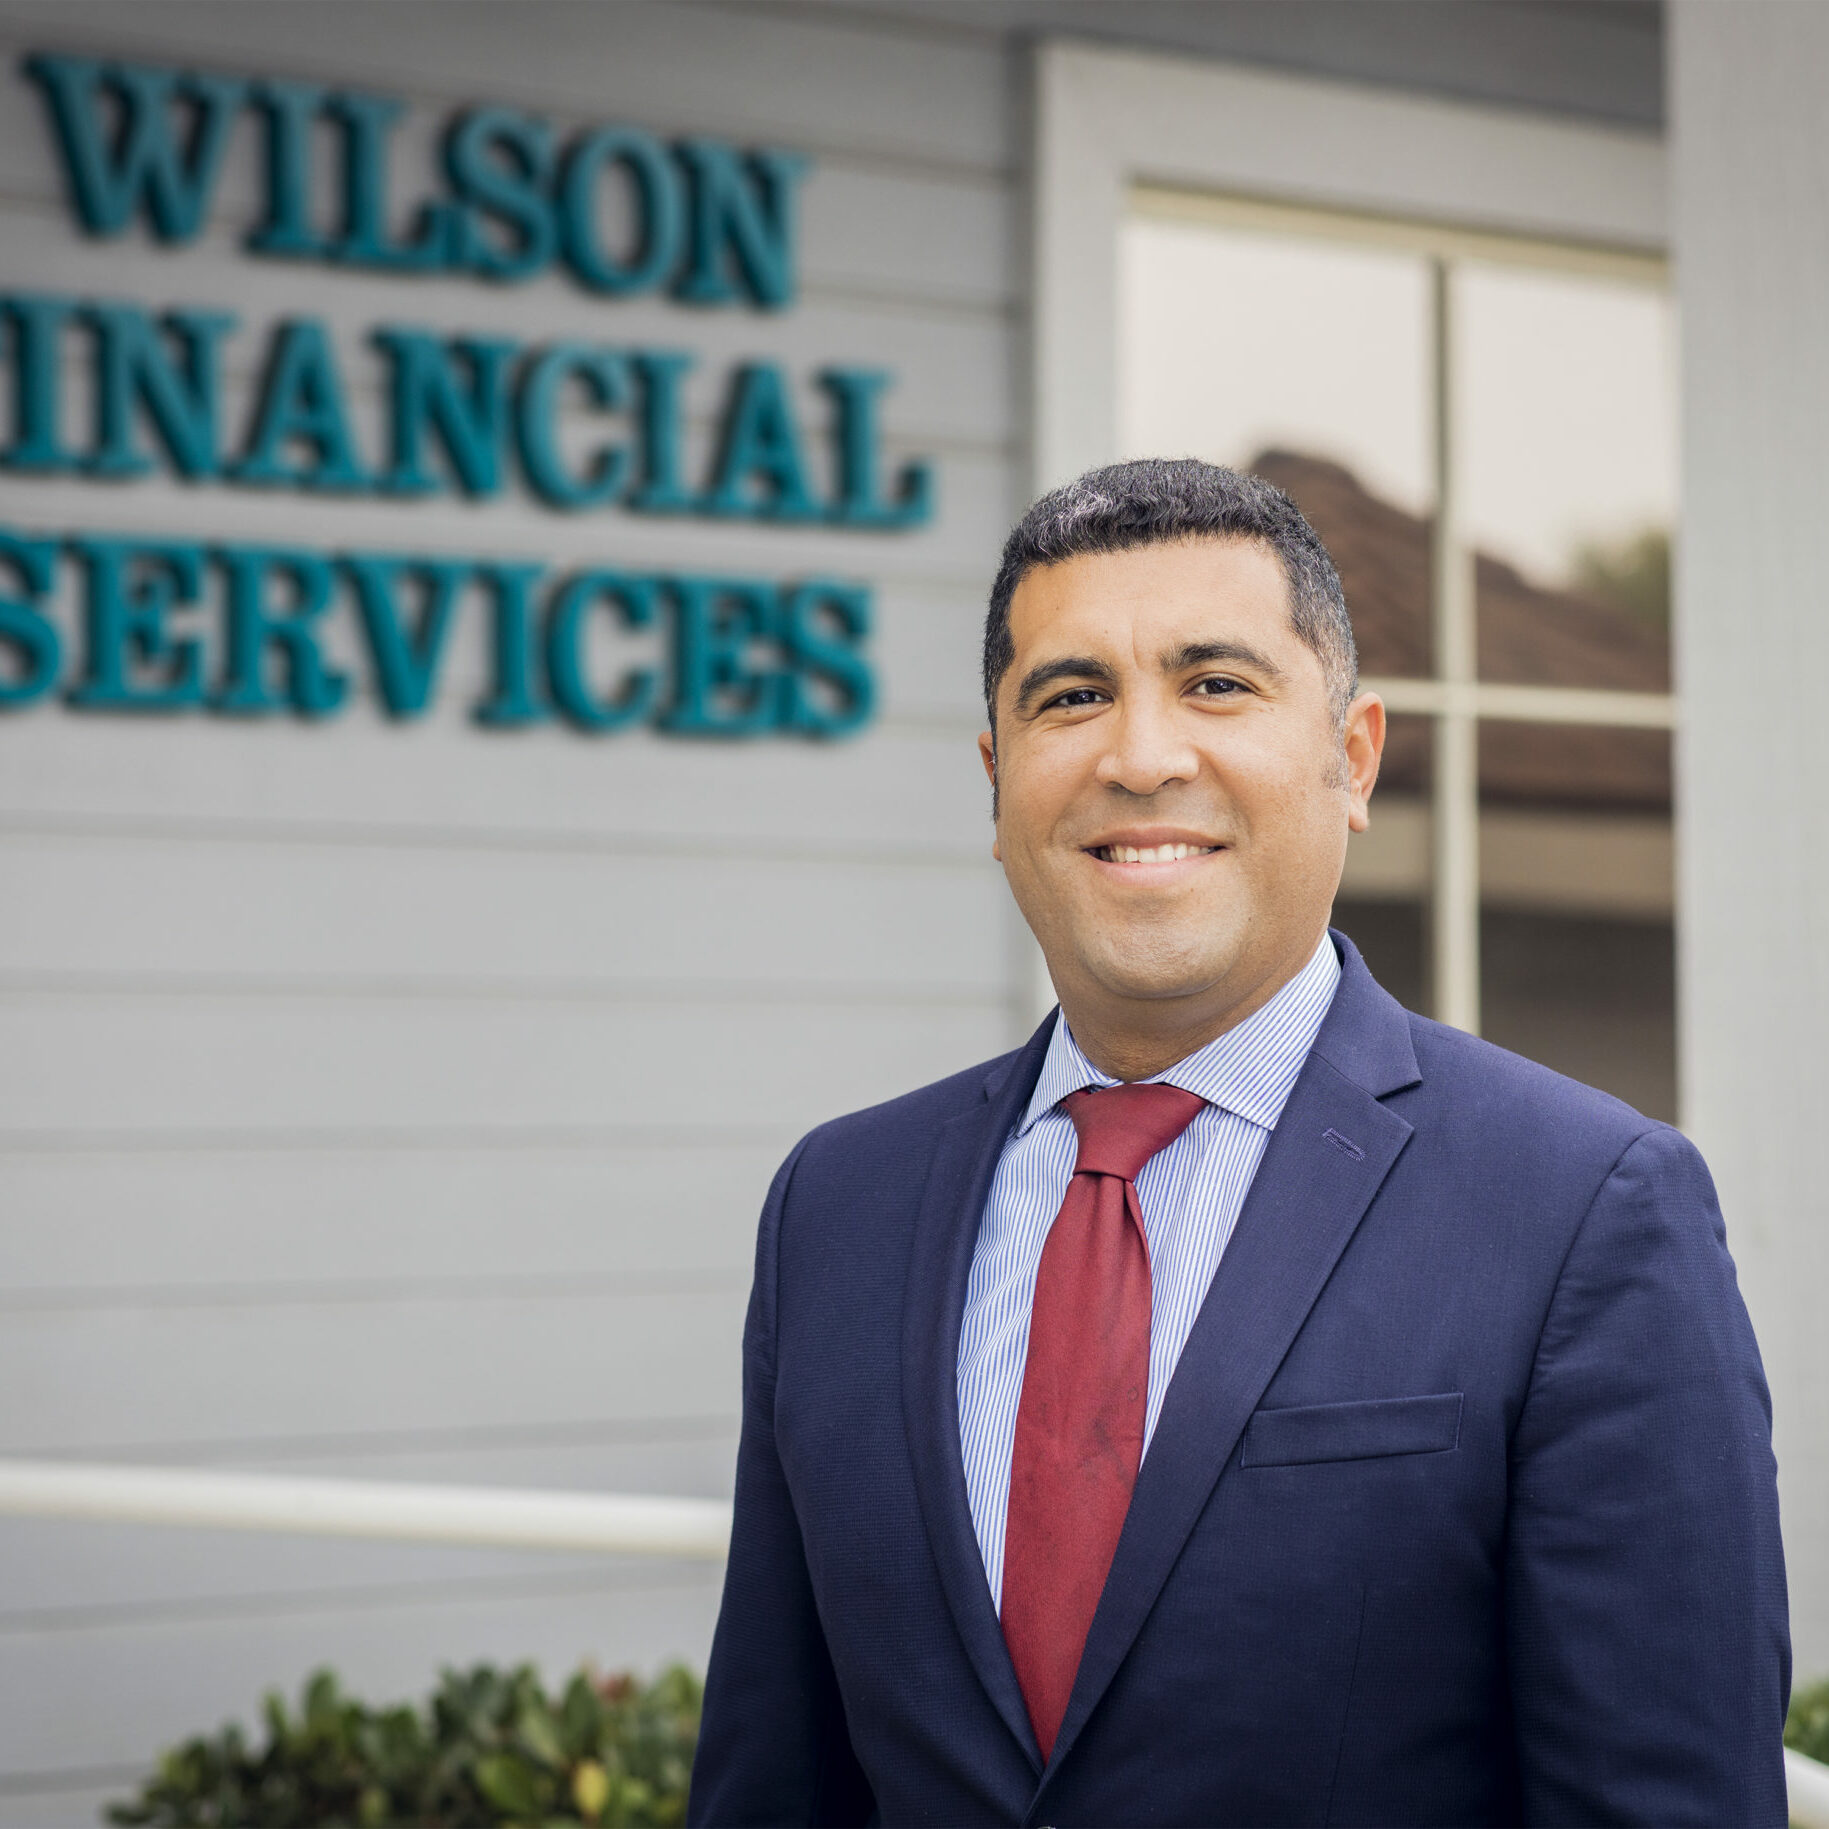 Wilson Financial Services_Dennis Wilson_Juan